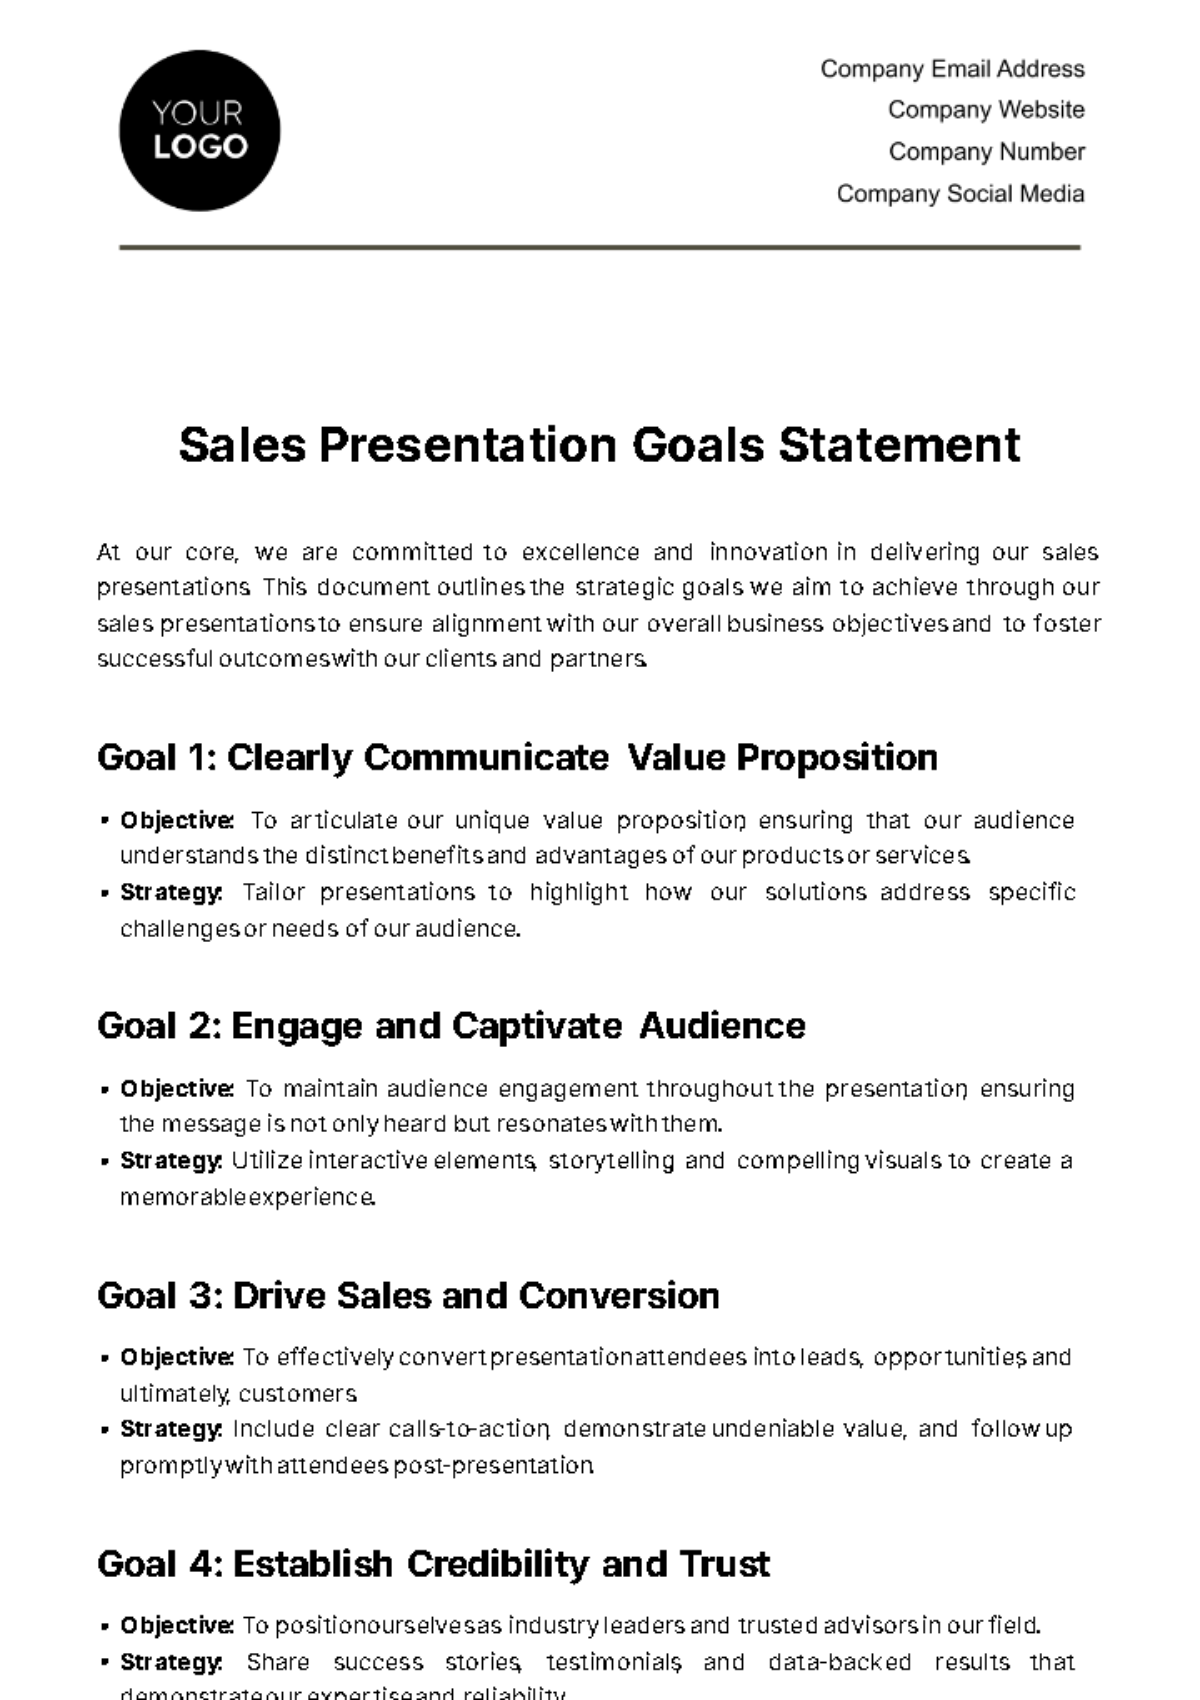 Free Sales Presentation Goals Statement Template